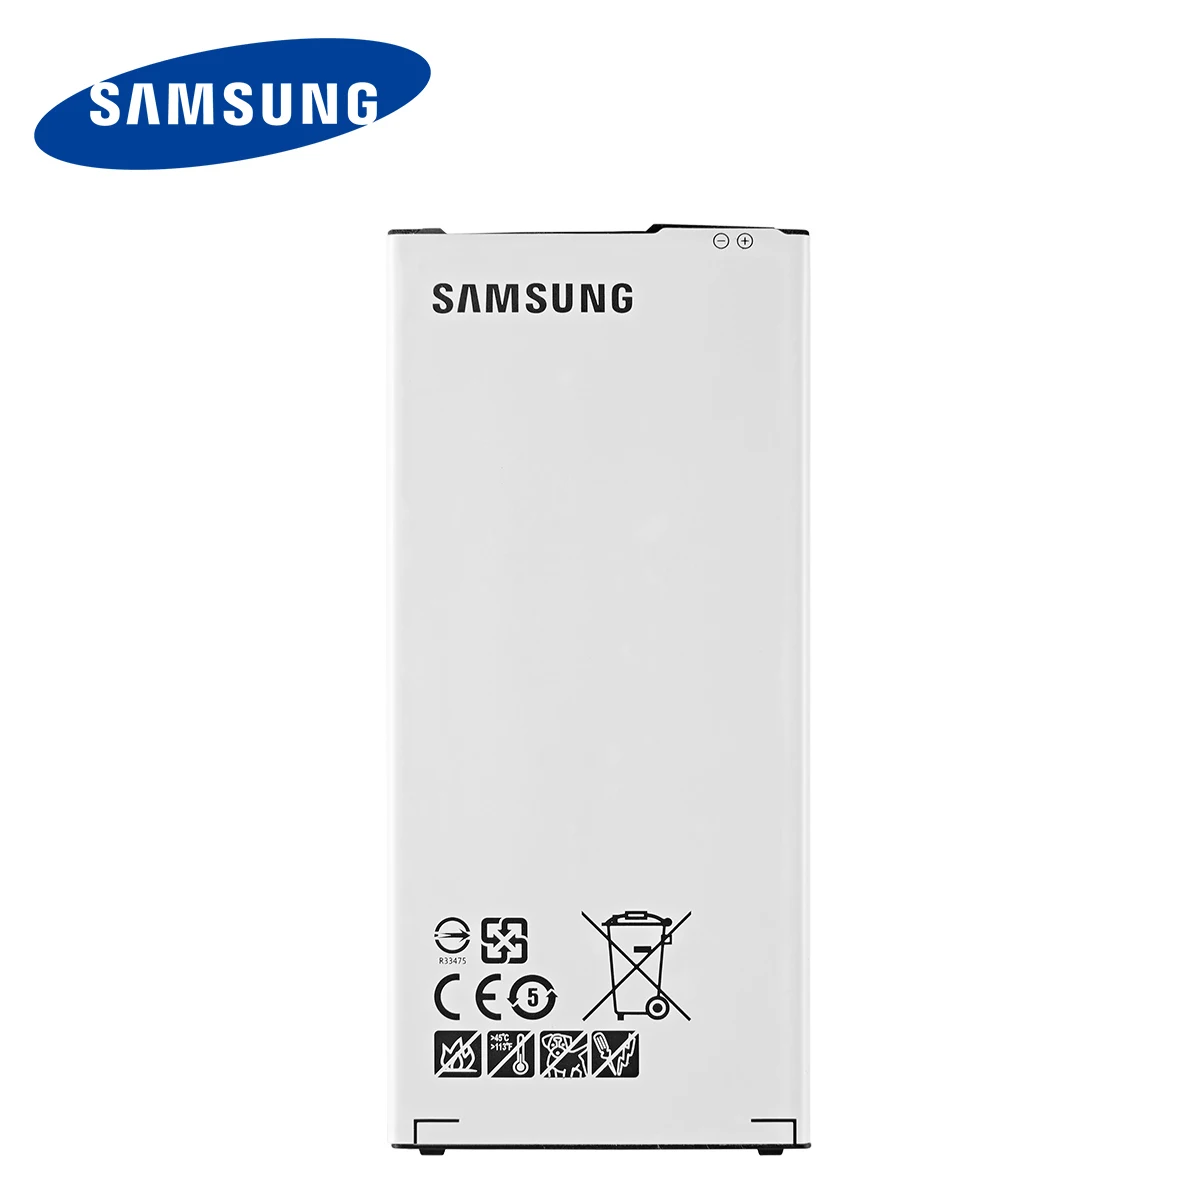 Originalni SAMSUNG EB-BA710ABE 3300mAh baterija Za Samsung GALAXY A7 A7100 A710 A7109 A710F 2016 Edition Mobilni Telefon +Orodja